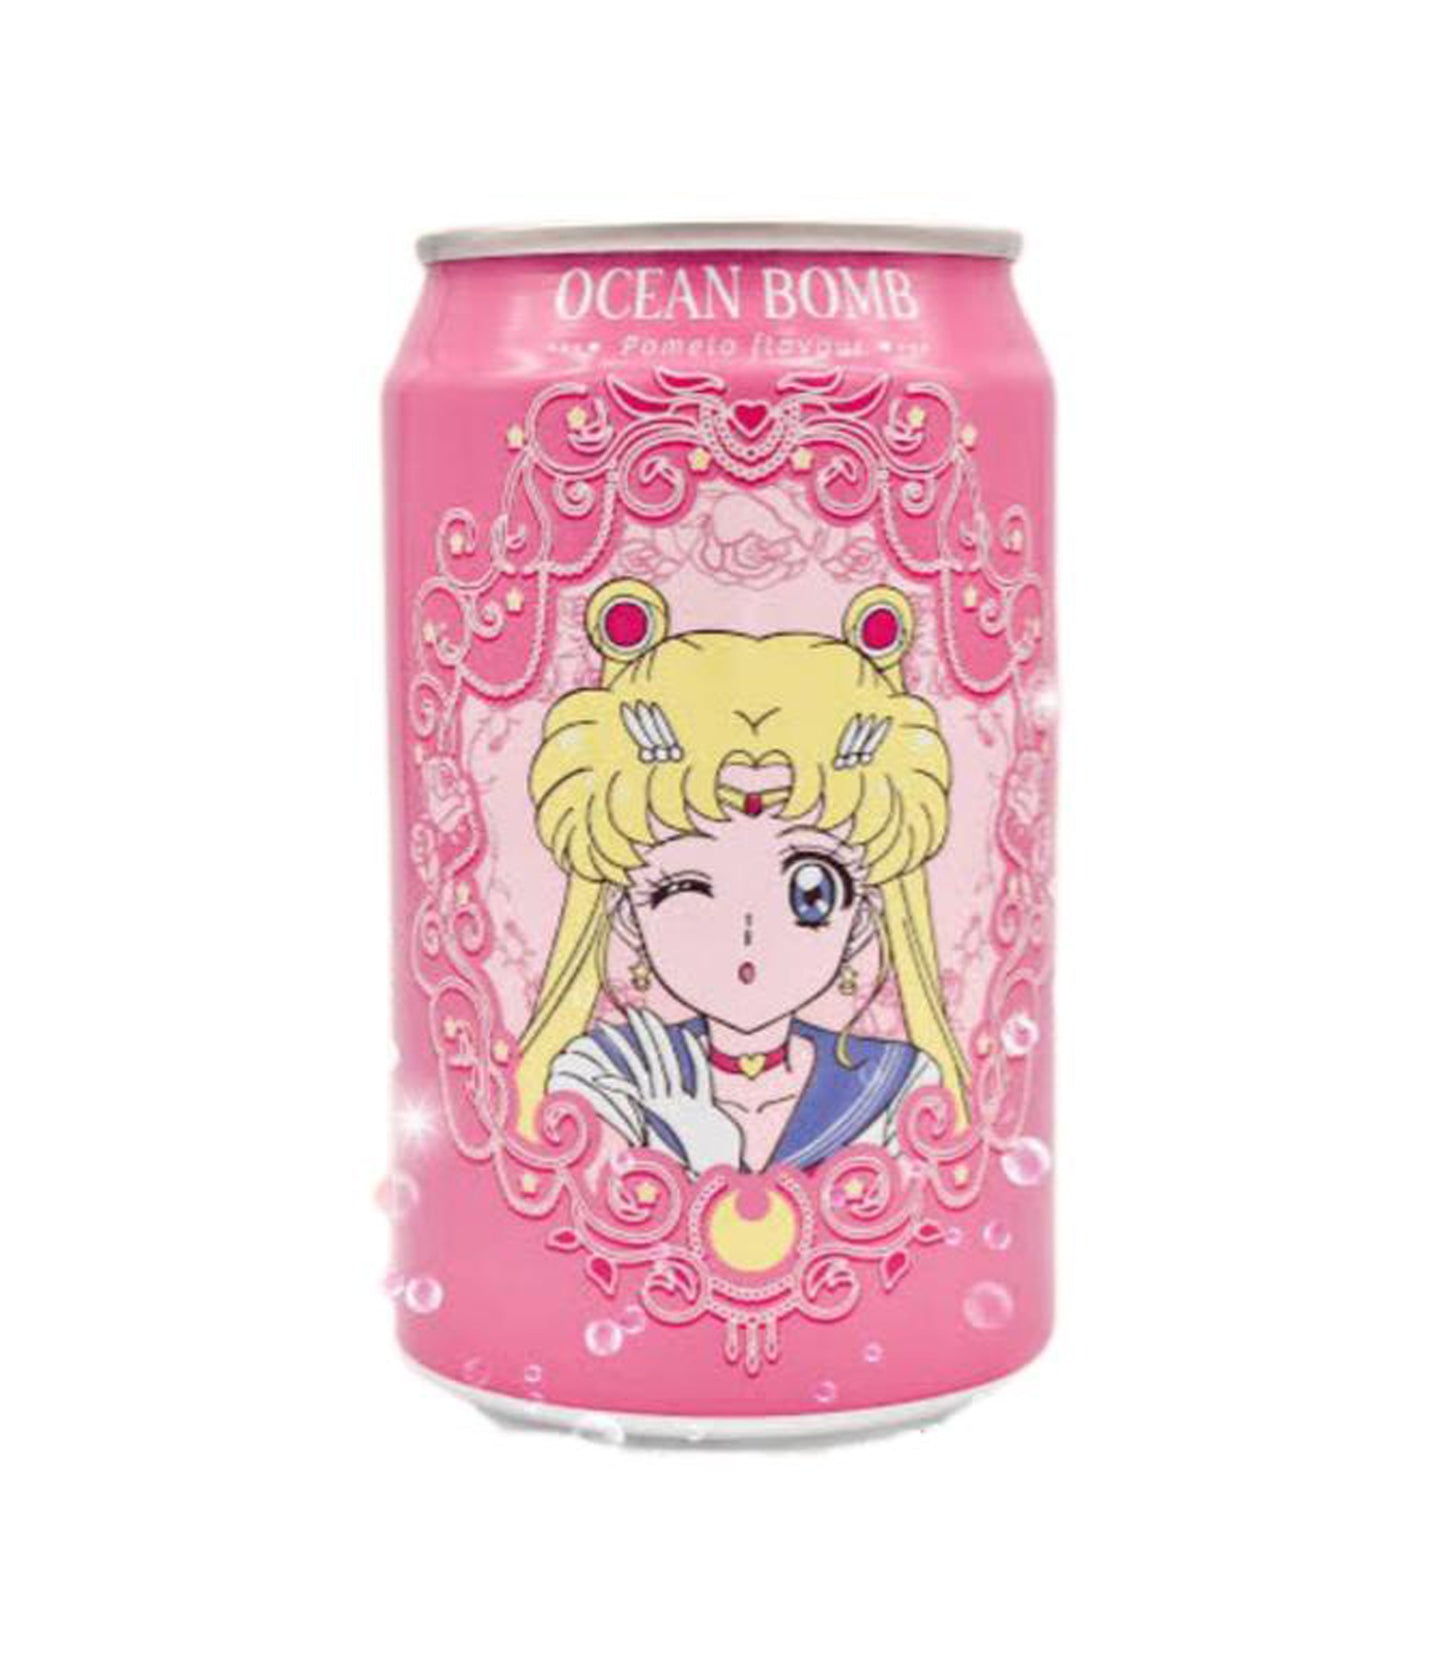 Ocean Bomb – Sailor Moon Sparkling Water (Pomelo Flavour) 330ml